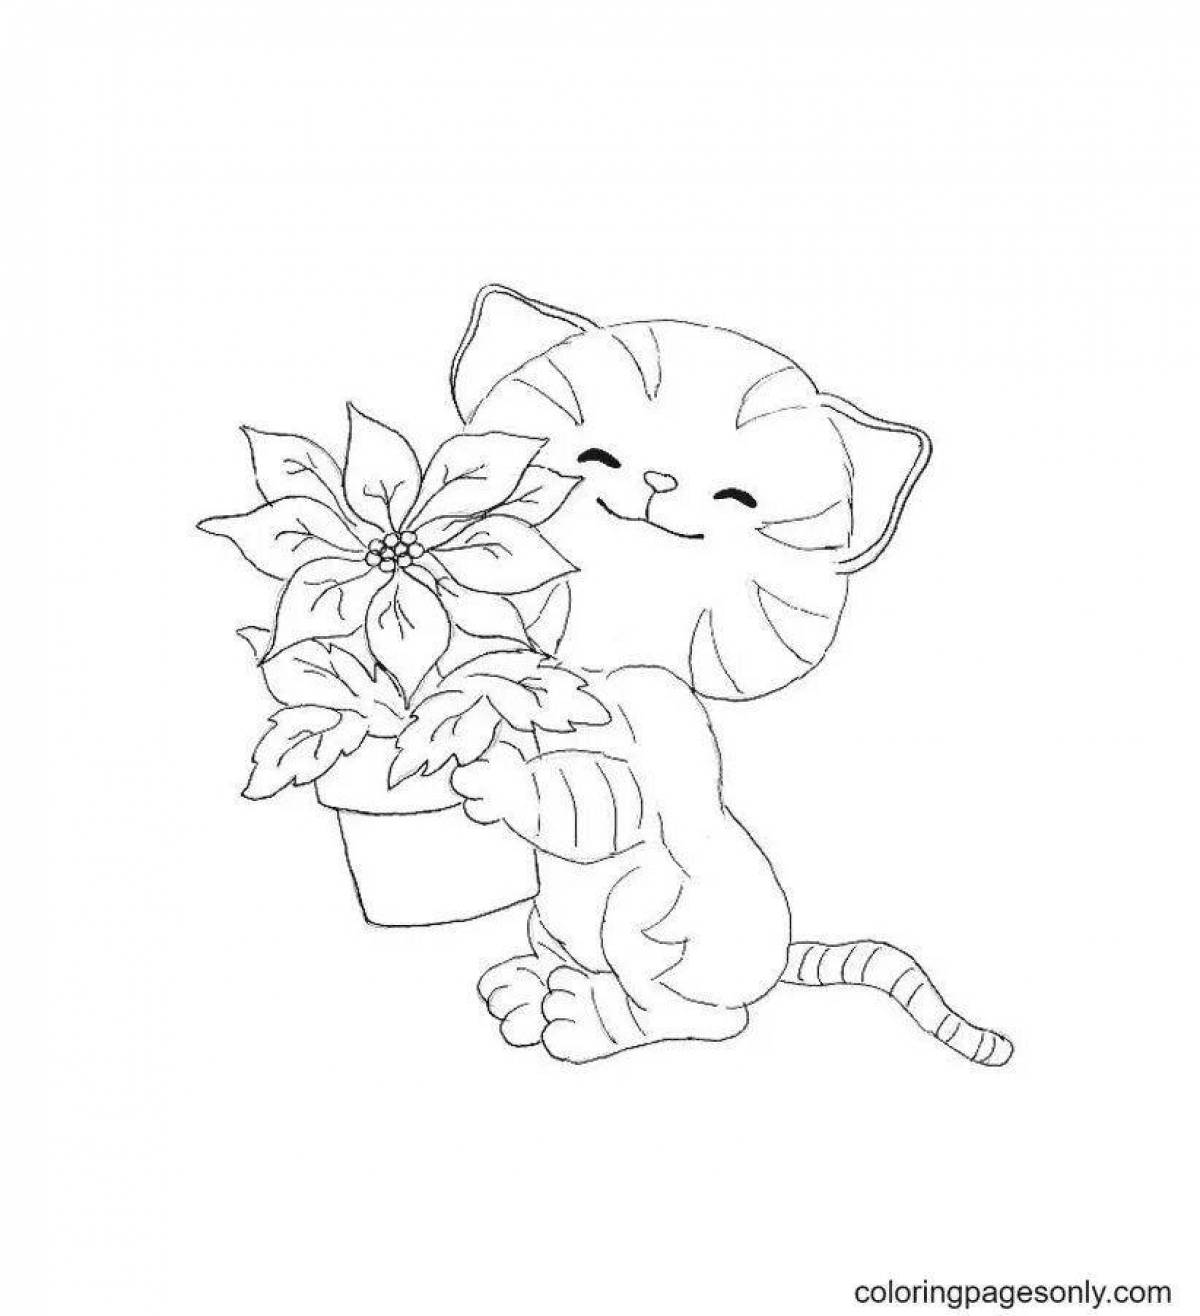 Рисунки для срисовки на лист а4. Котенок. Раскраска. Раскраска. Котики. Раскраска кот. Раскраска котенок с цветами.